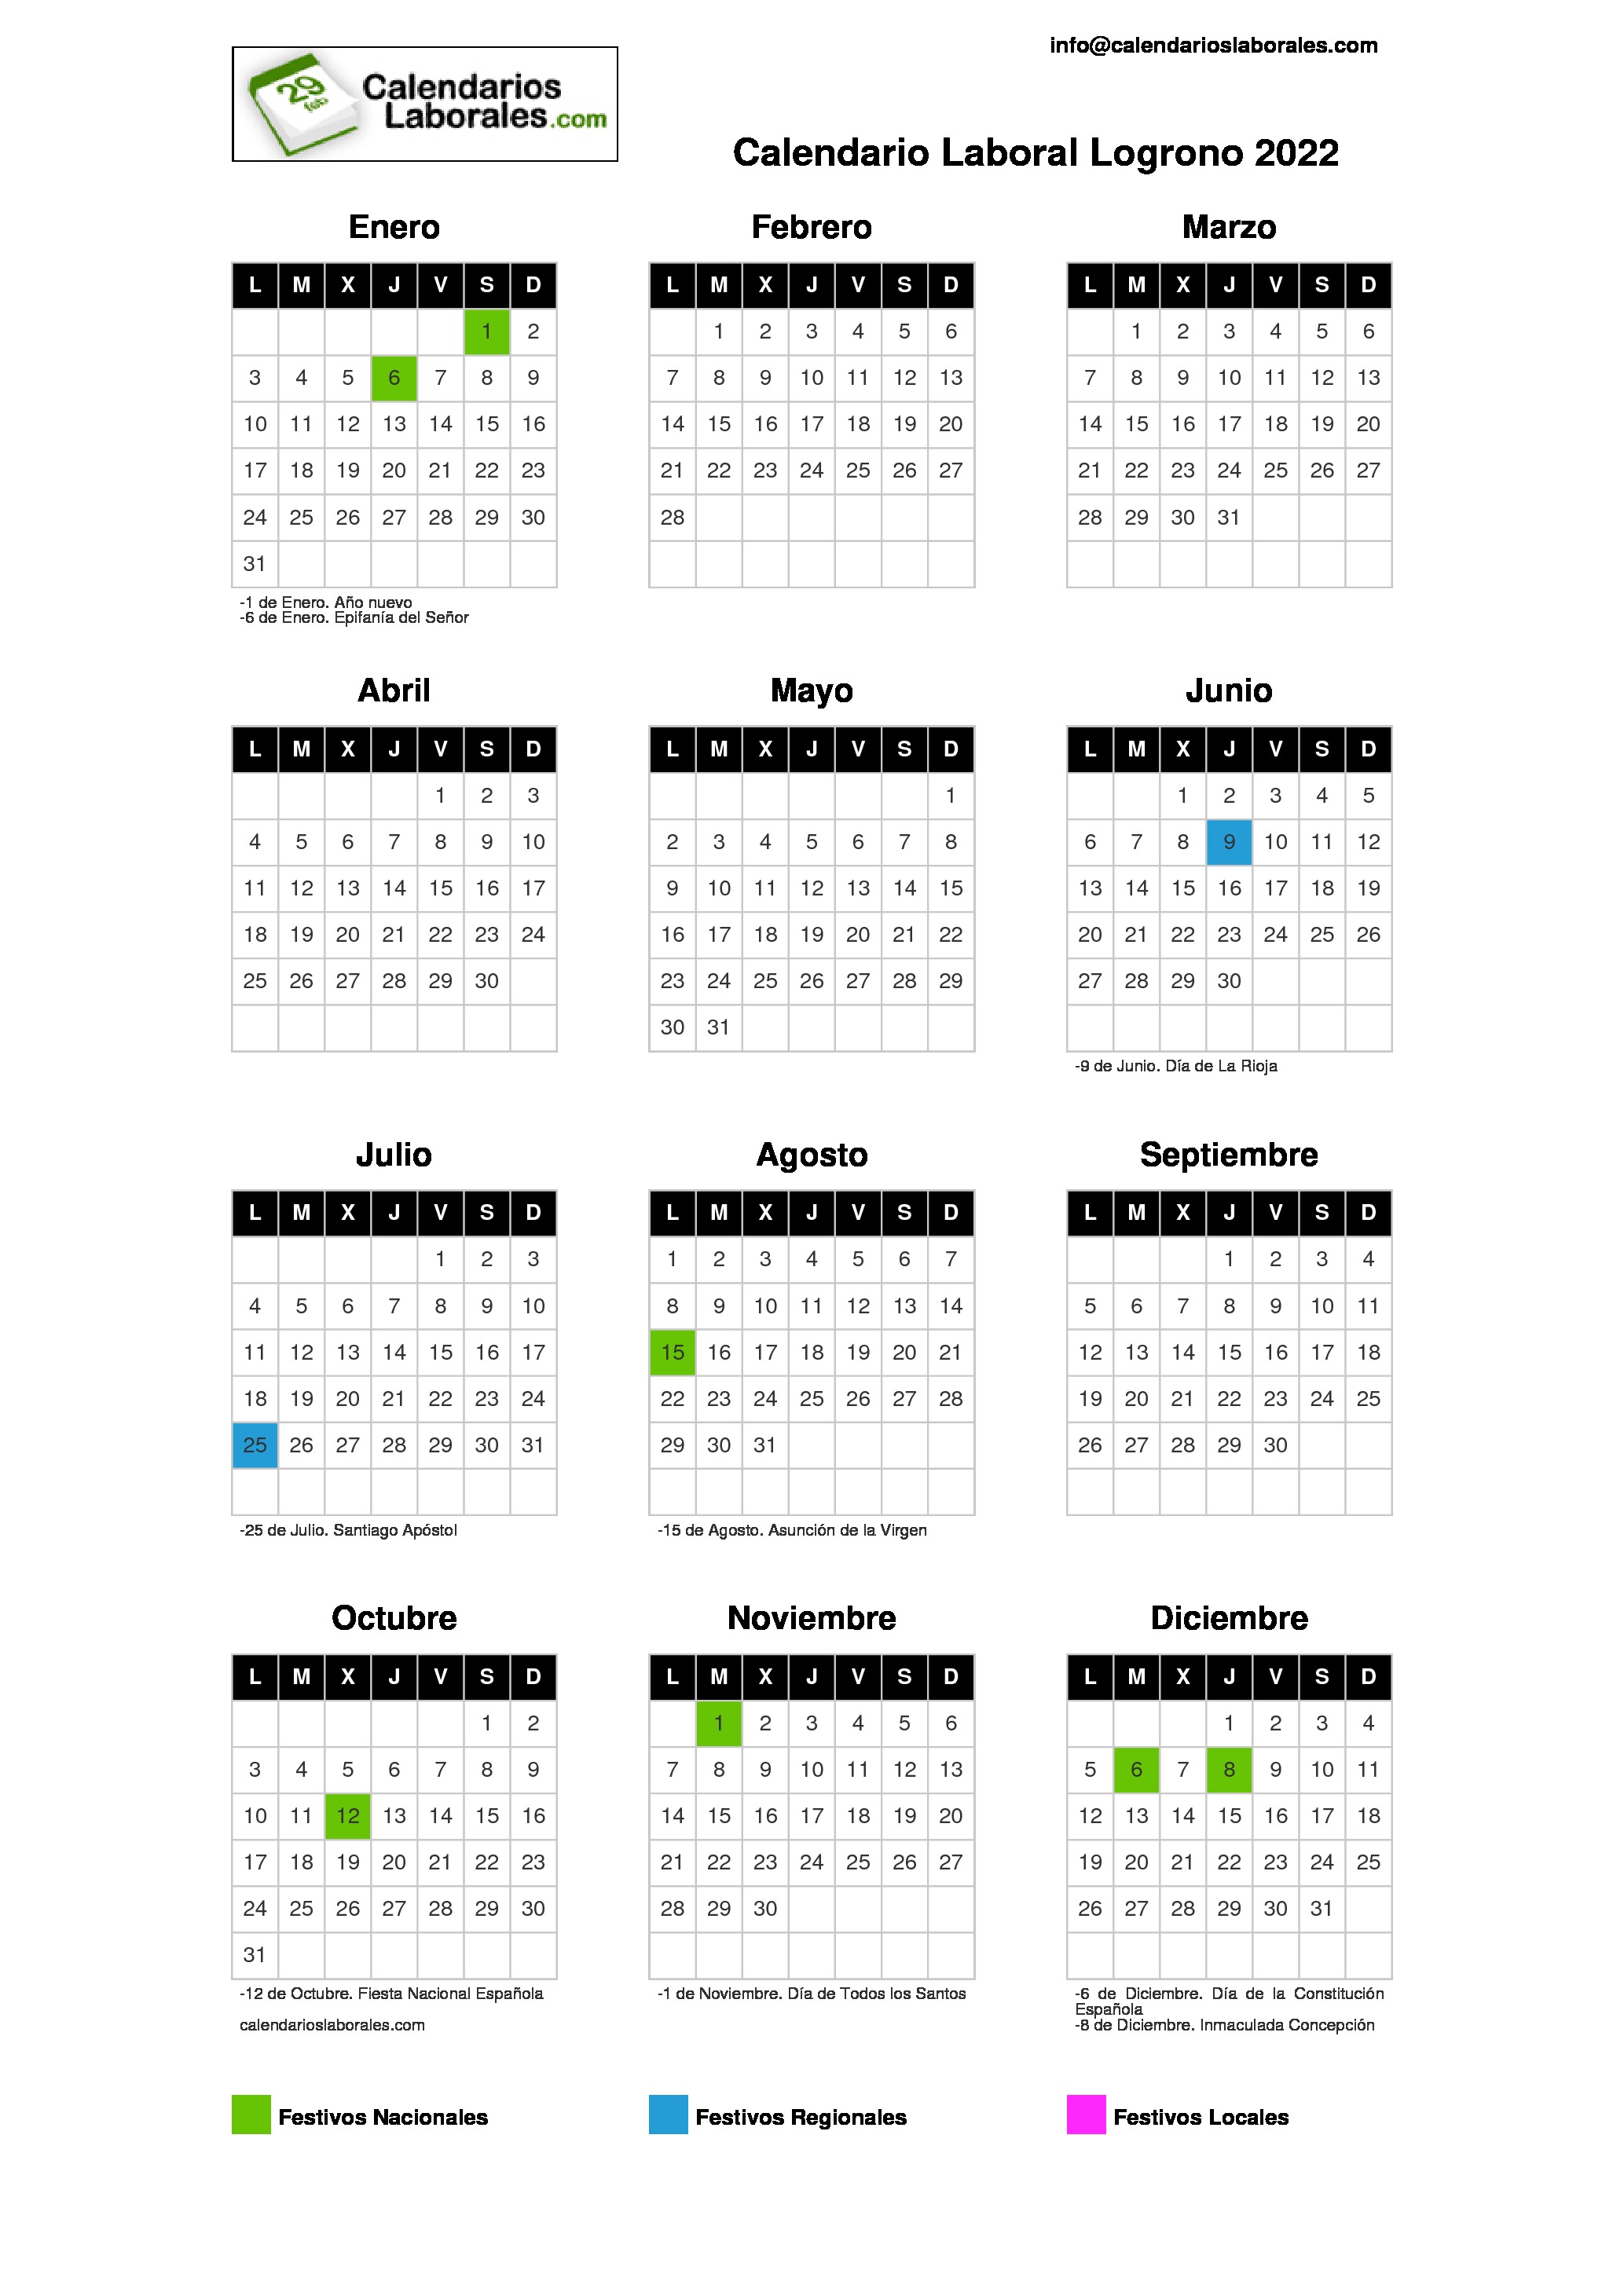 Calendario La Rioja 2023 Calendario Laboral Logroño 2022